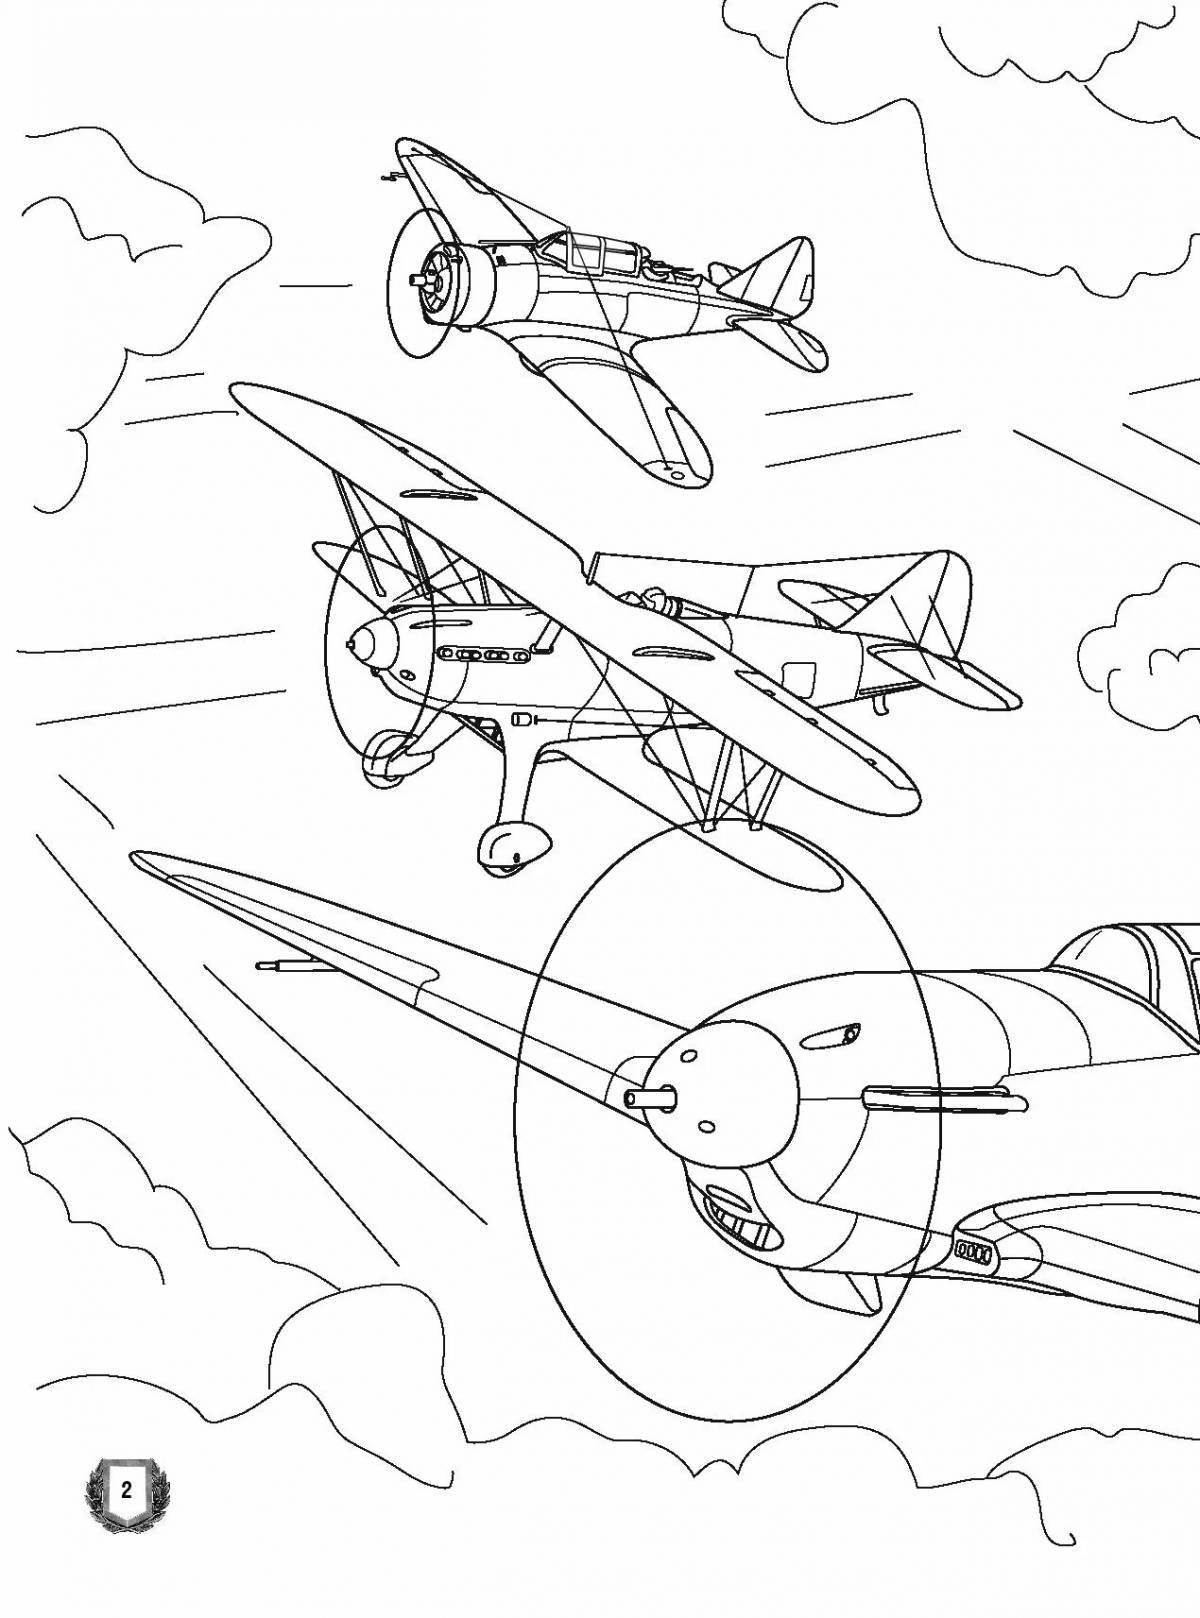 Сказочная страница раскраски самолета wow